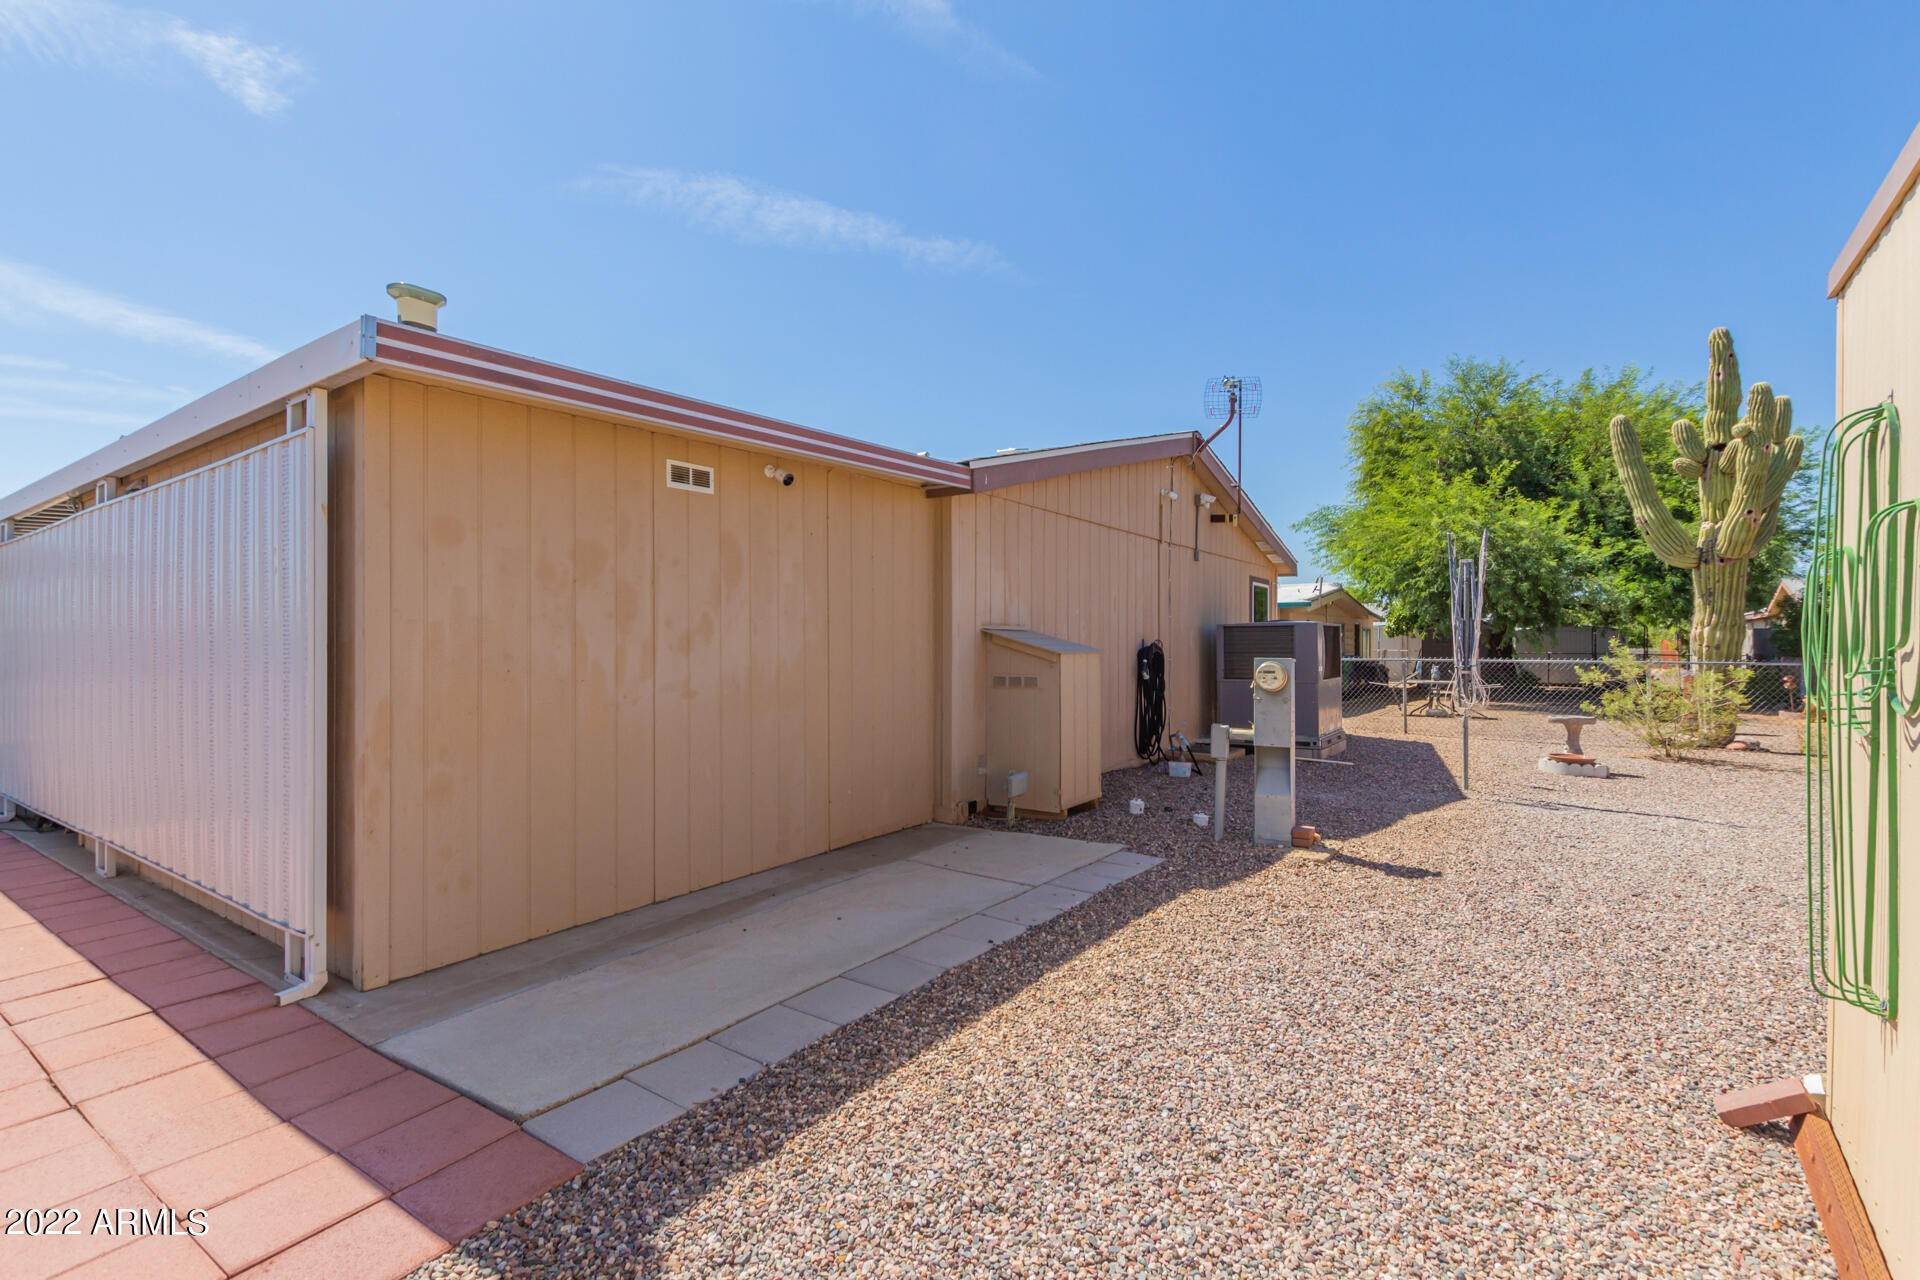 24. Mobile Home for Sale at Mesa, AZ 85209